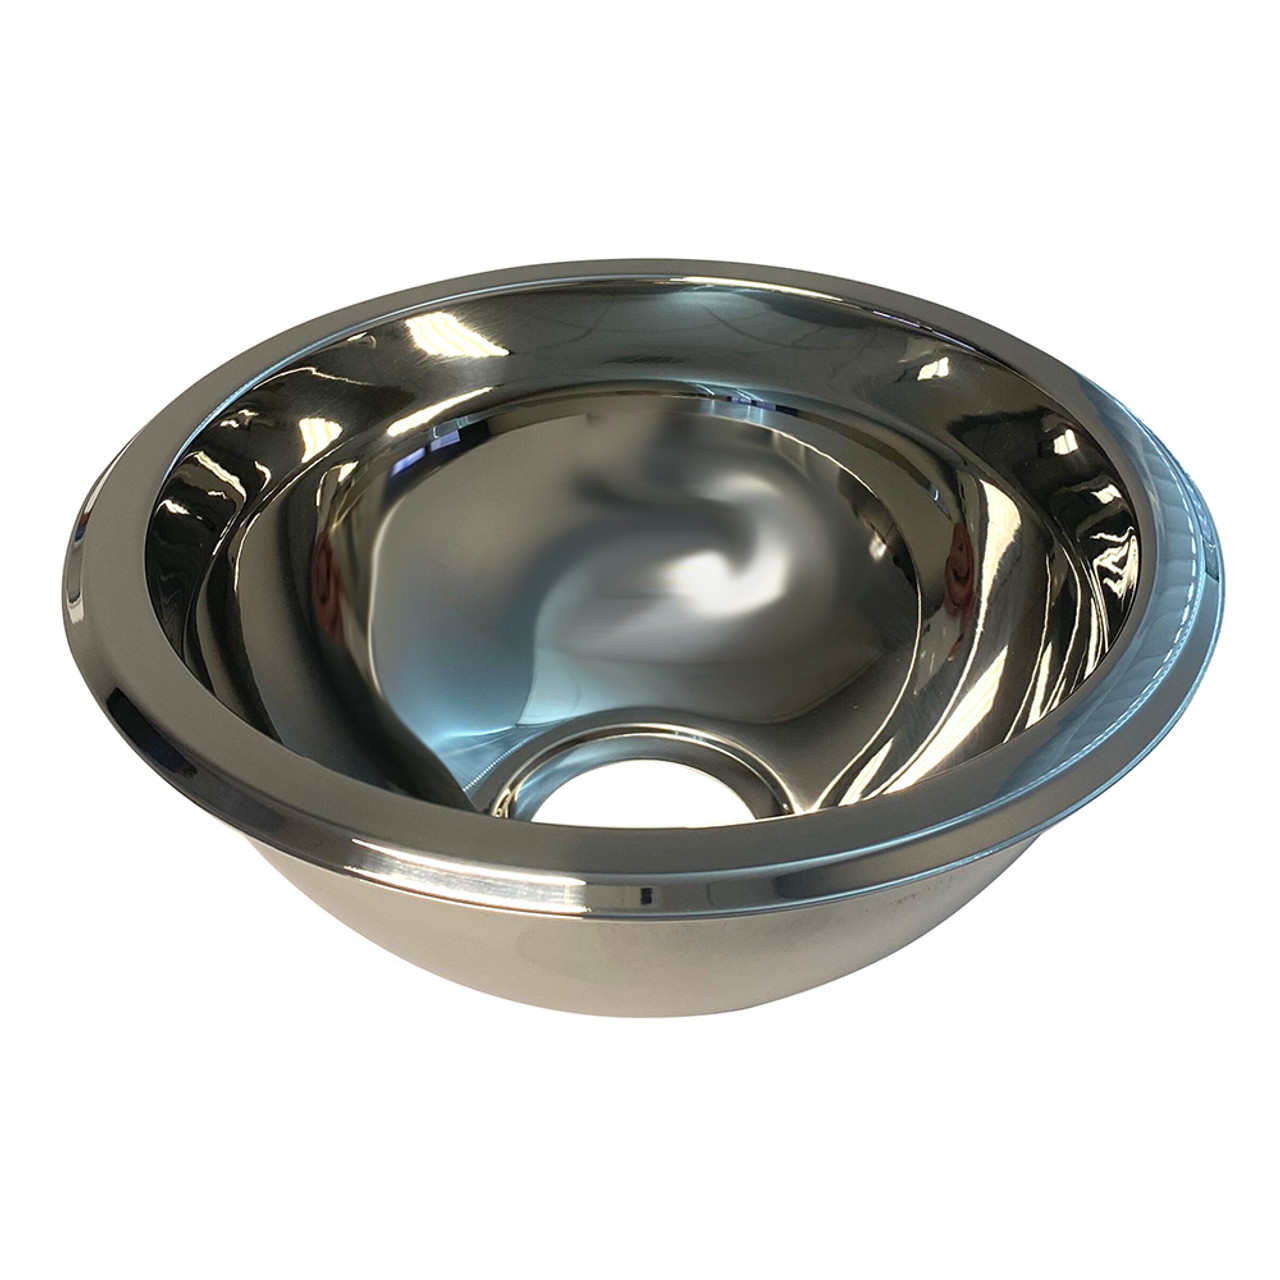 Scandvik - Sink Basin - 9" x 4", Mirror Finish, Stainless Steel - Apollo Lighting